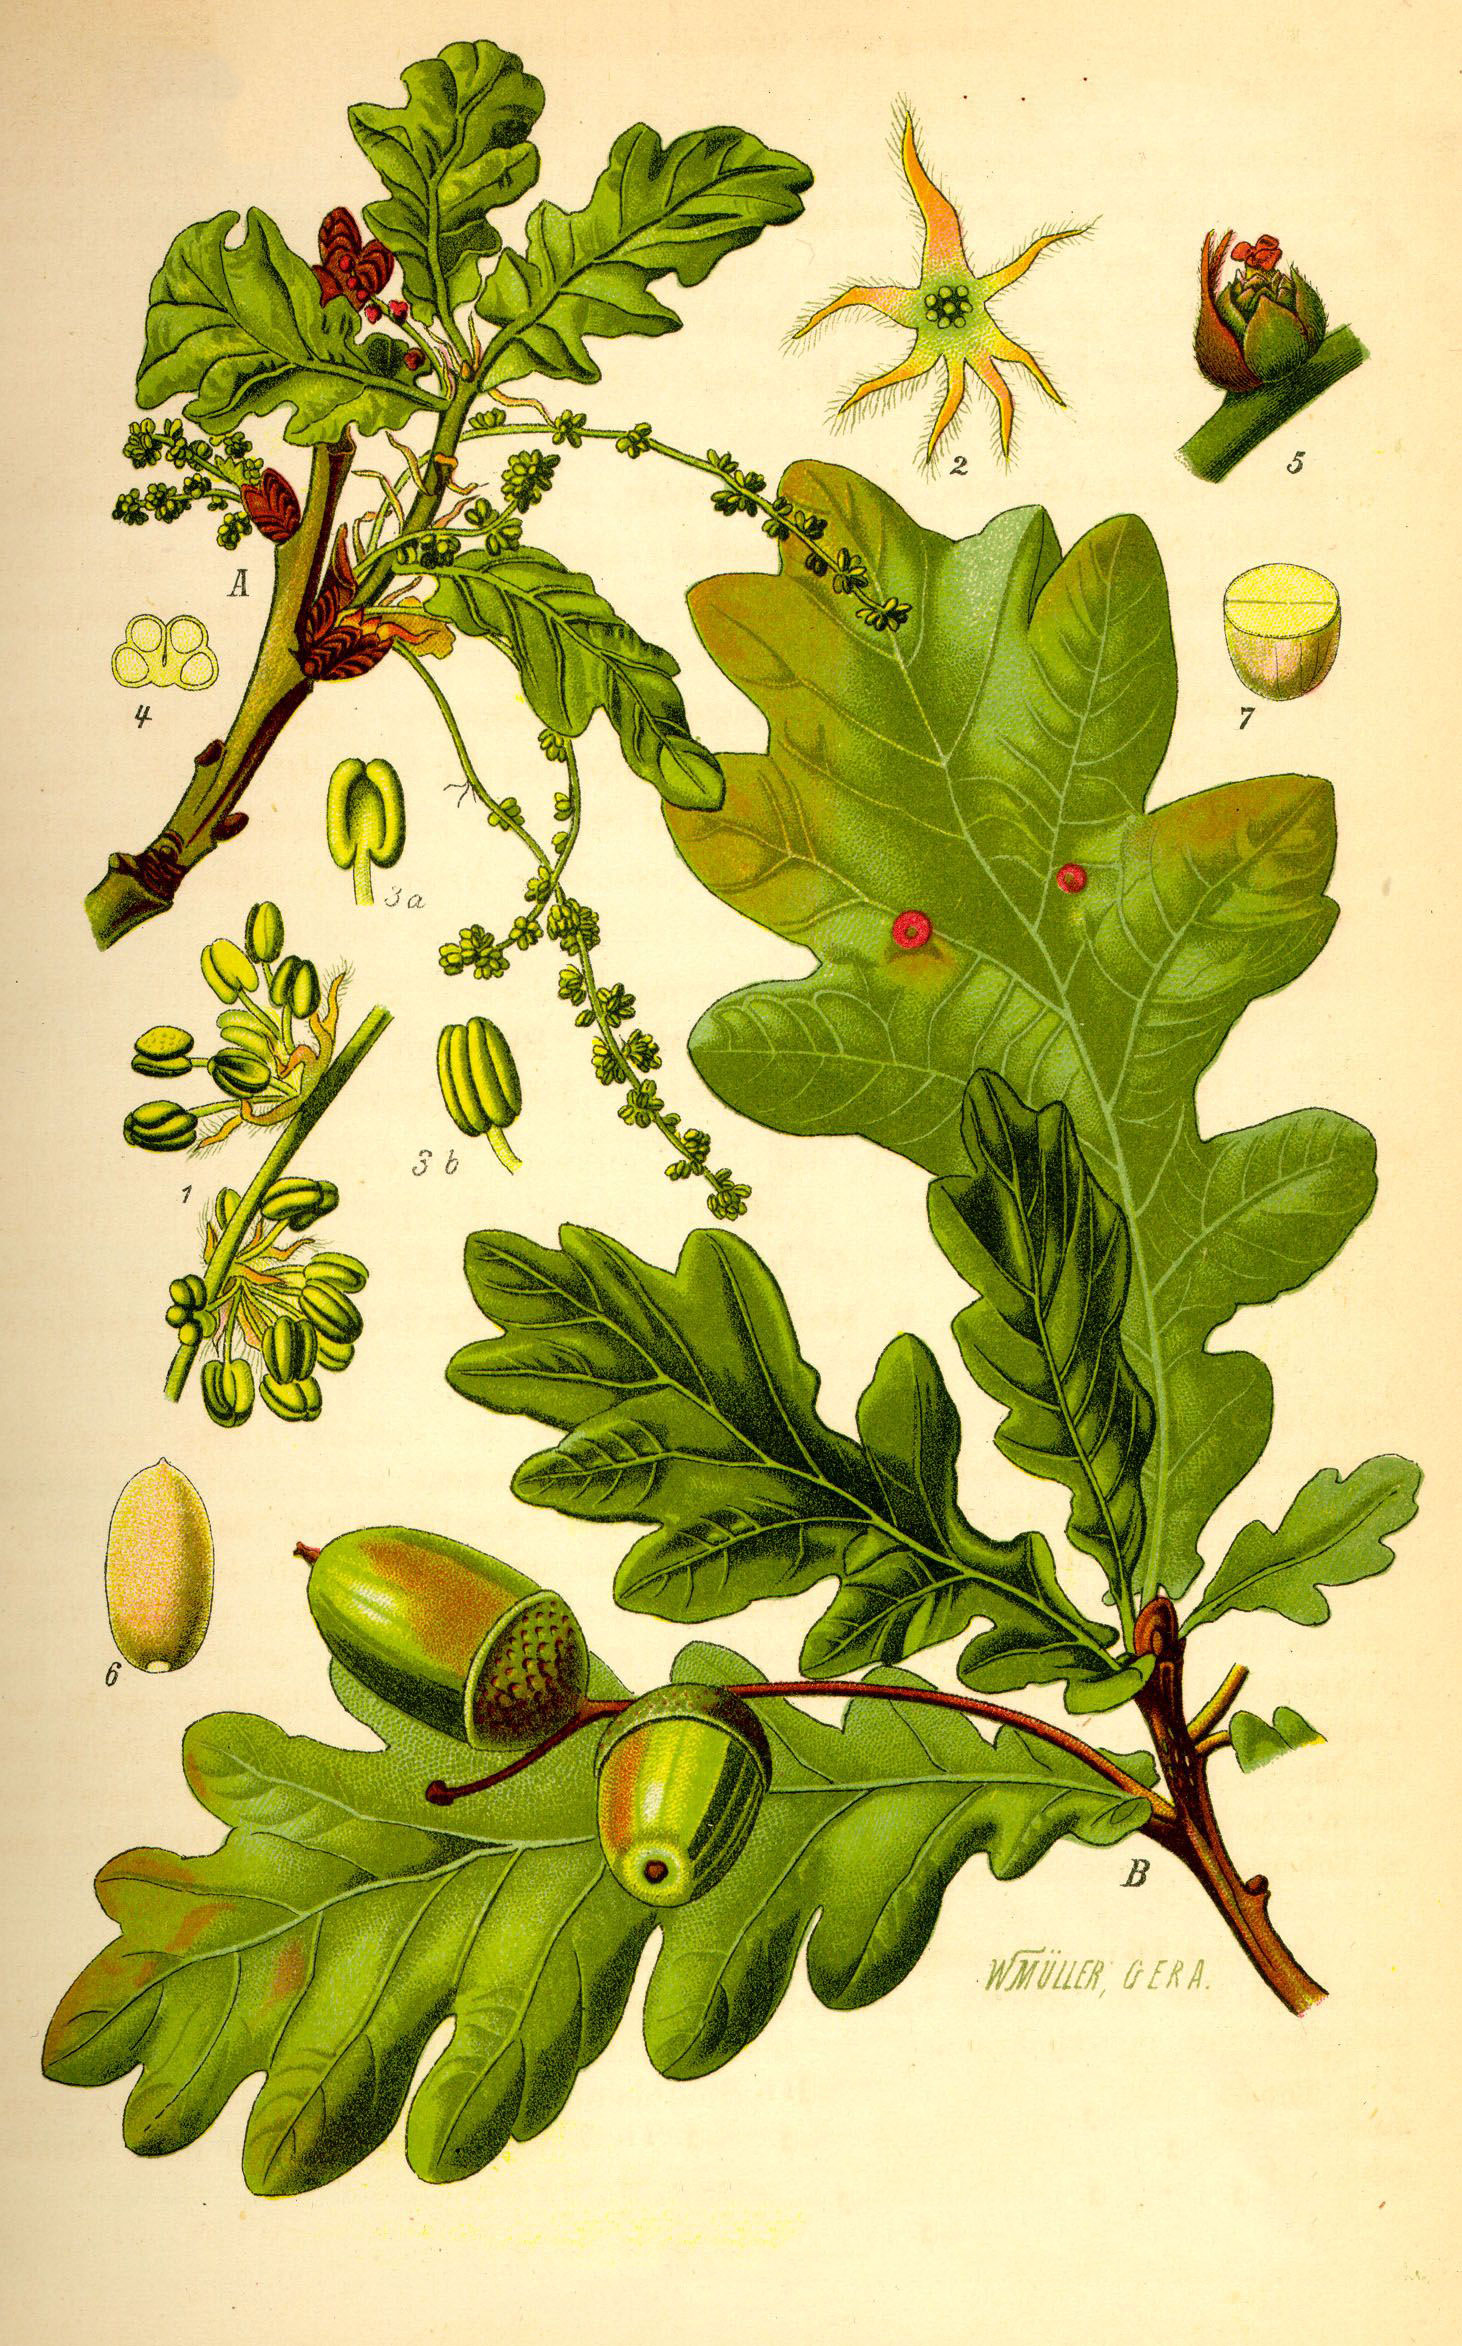 Plant-Illustration-of-White-oak